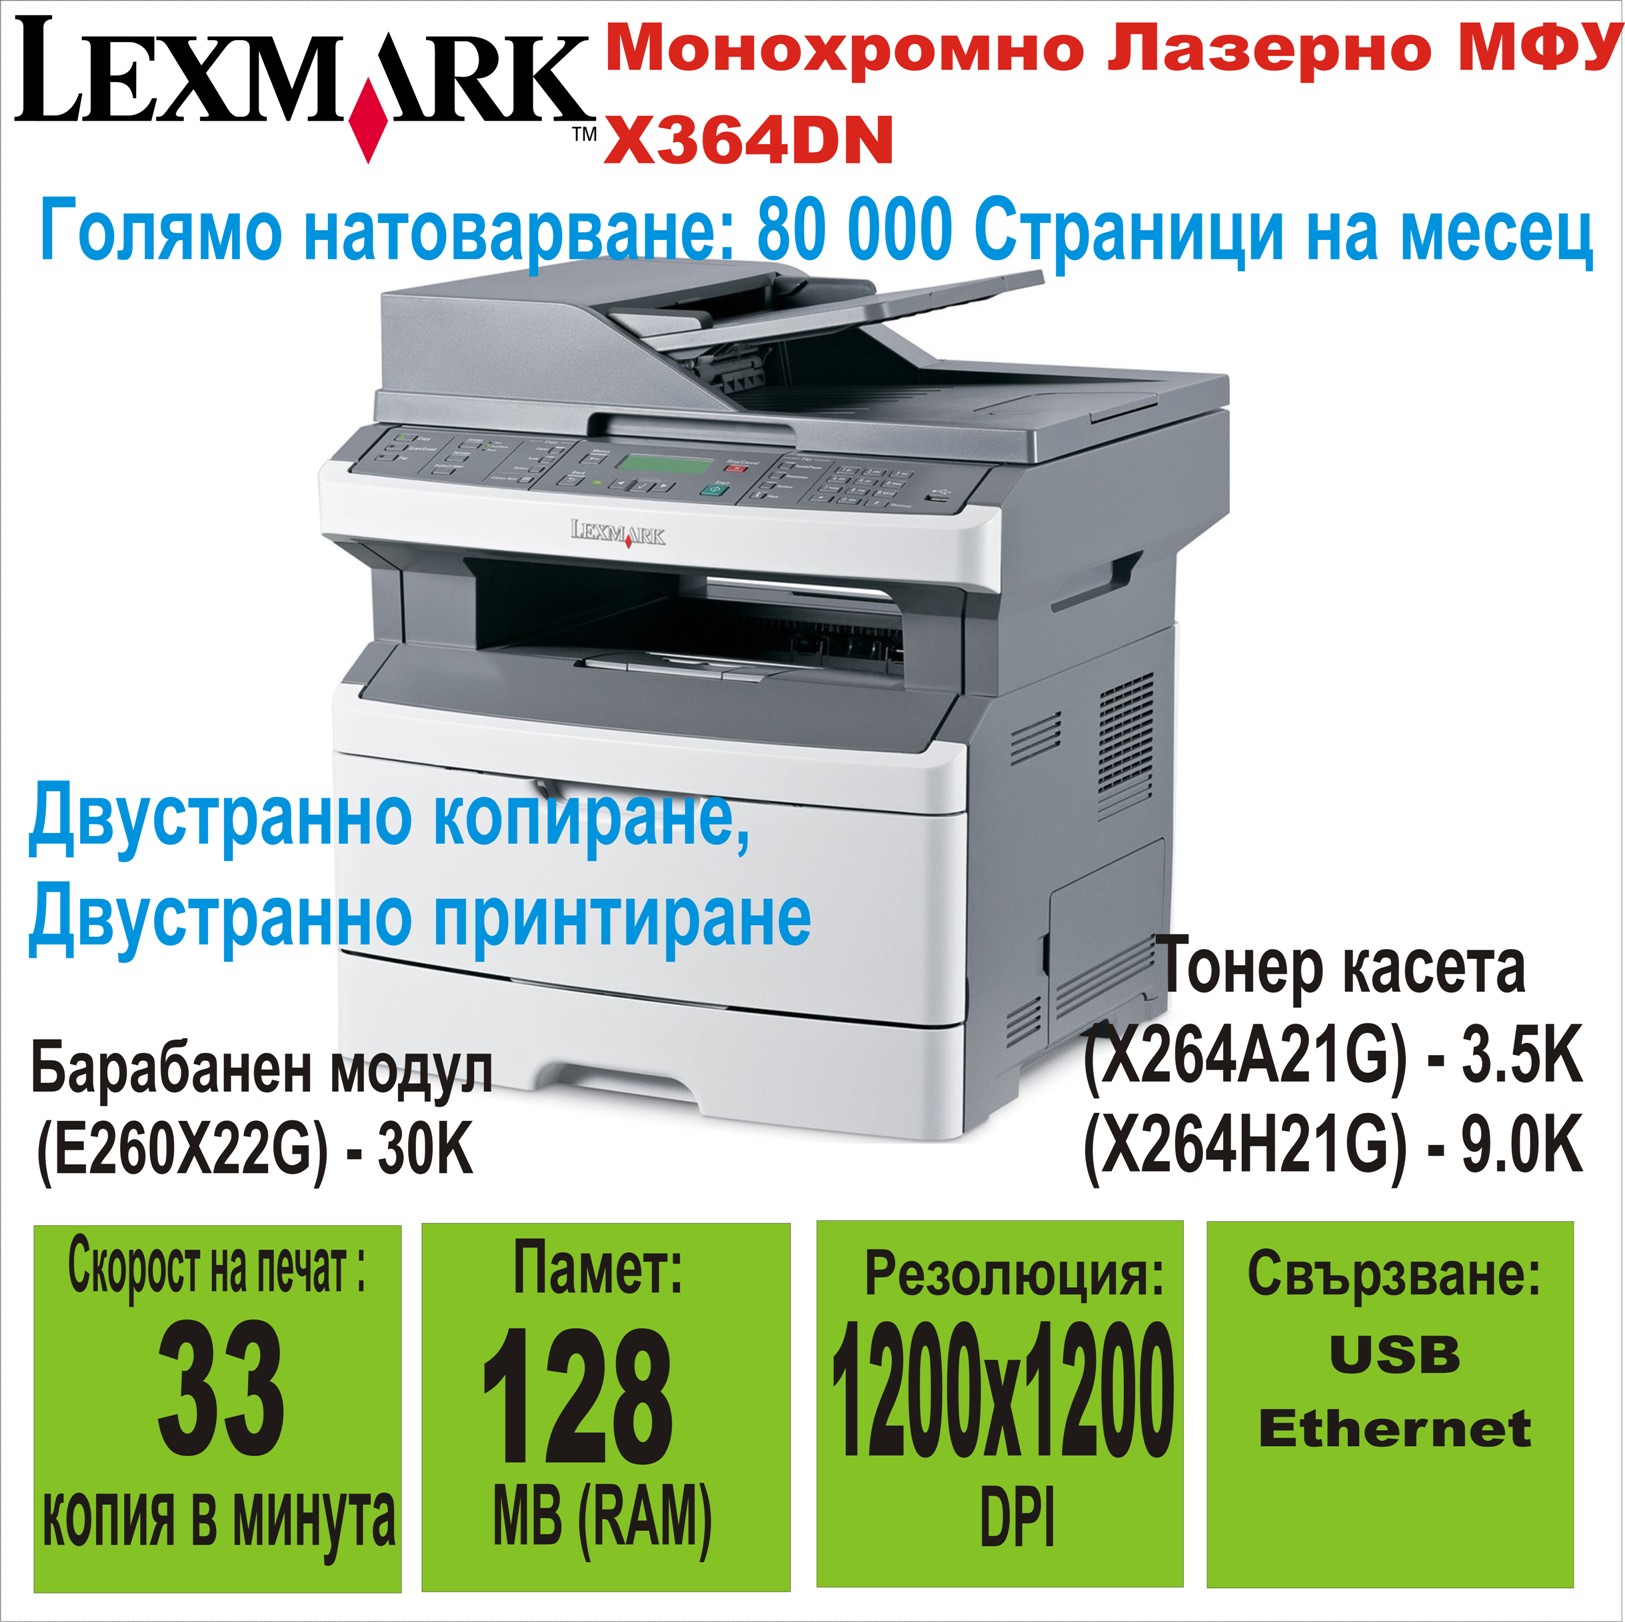 All-in-One Printer Lexmark X364DN.